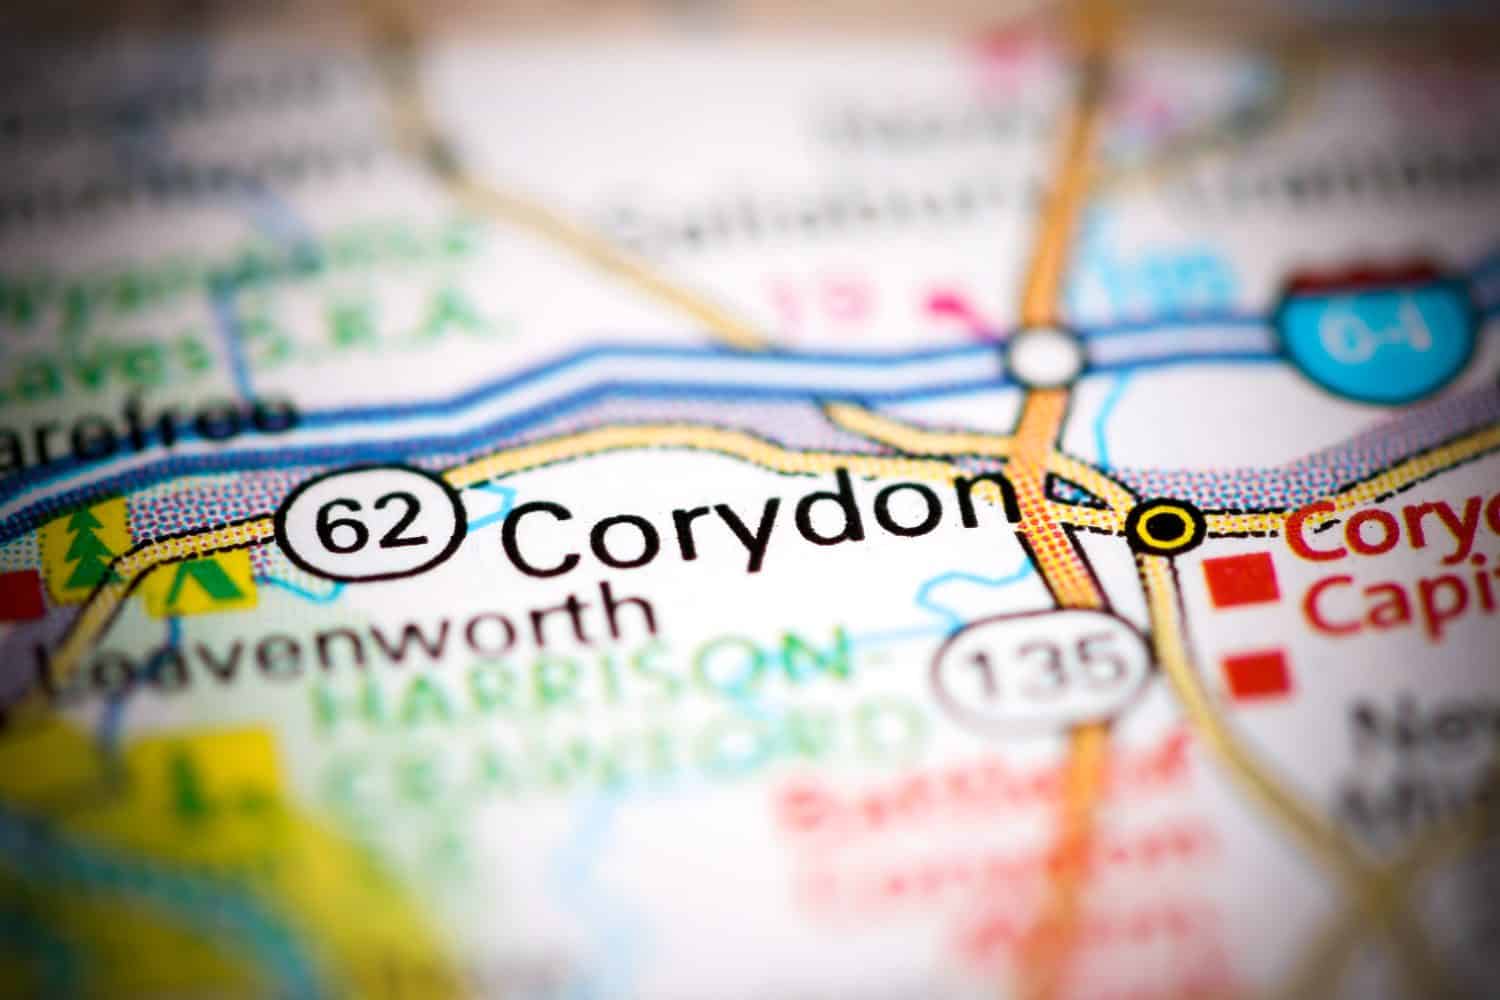 Corydon. Indiana. USA on a geography map